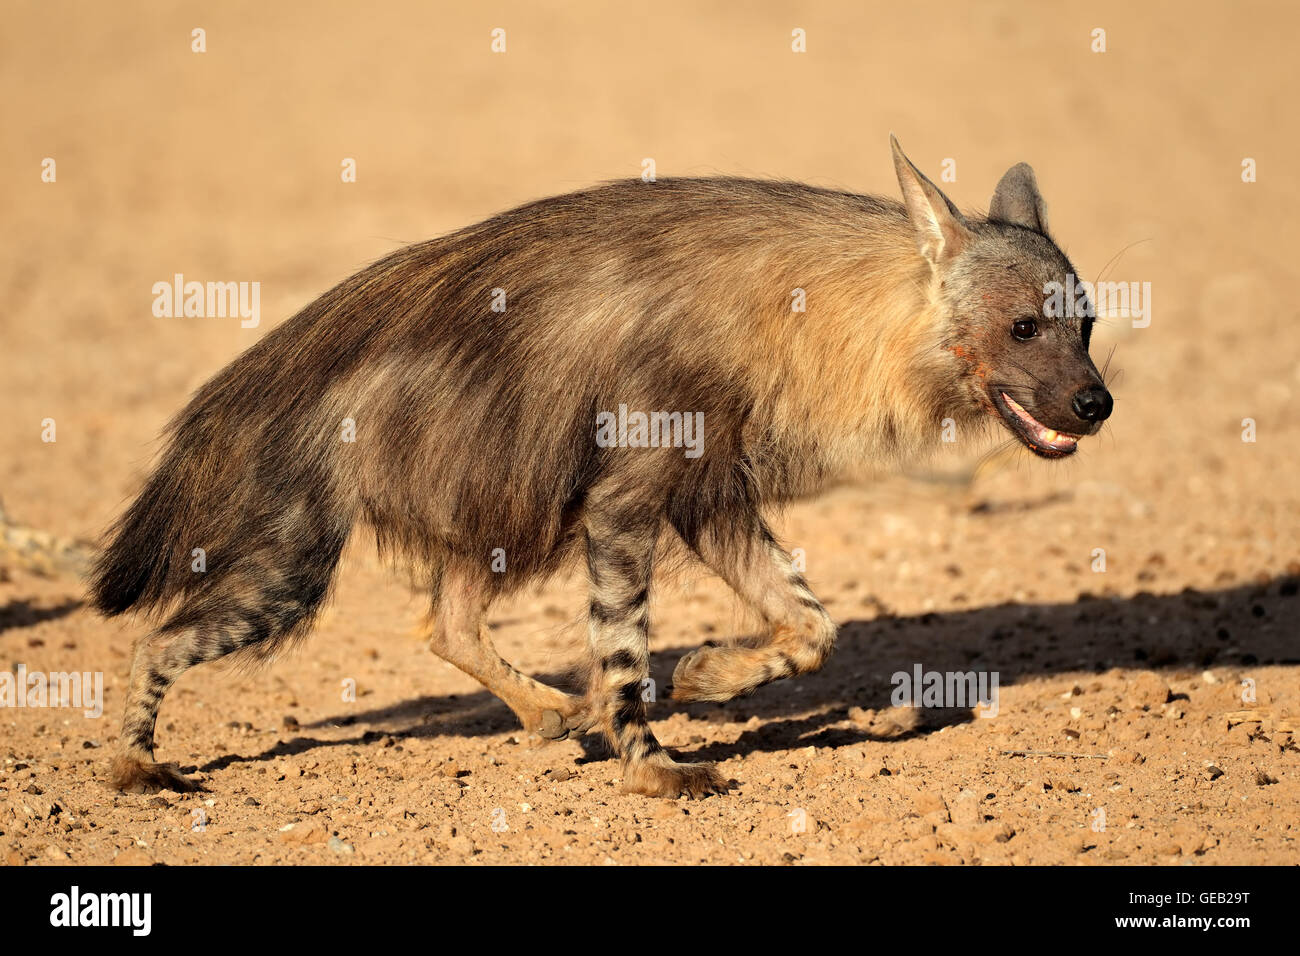 Alert brown hyena (Hyaena brunnea), Kalahari desert, South Africa Stock Photo